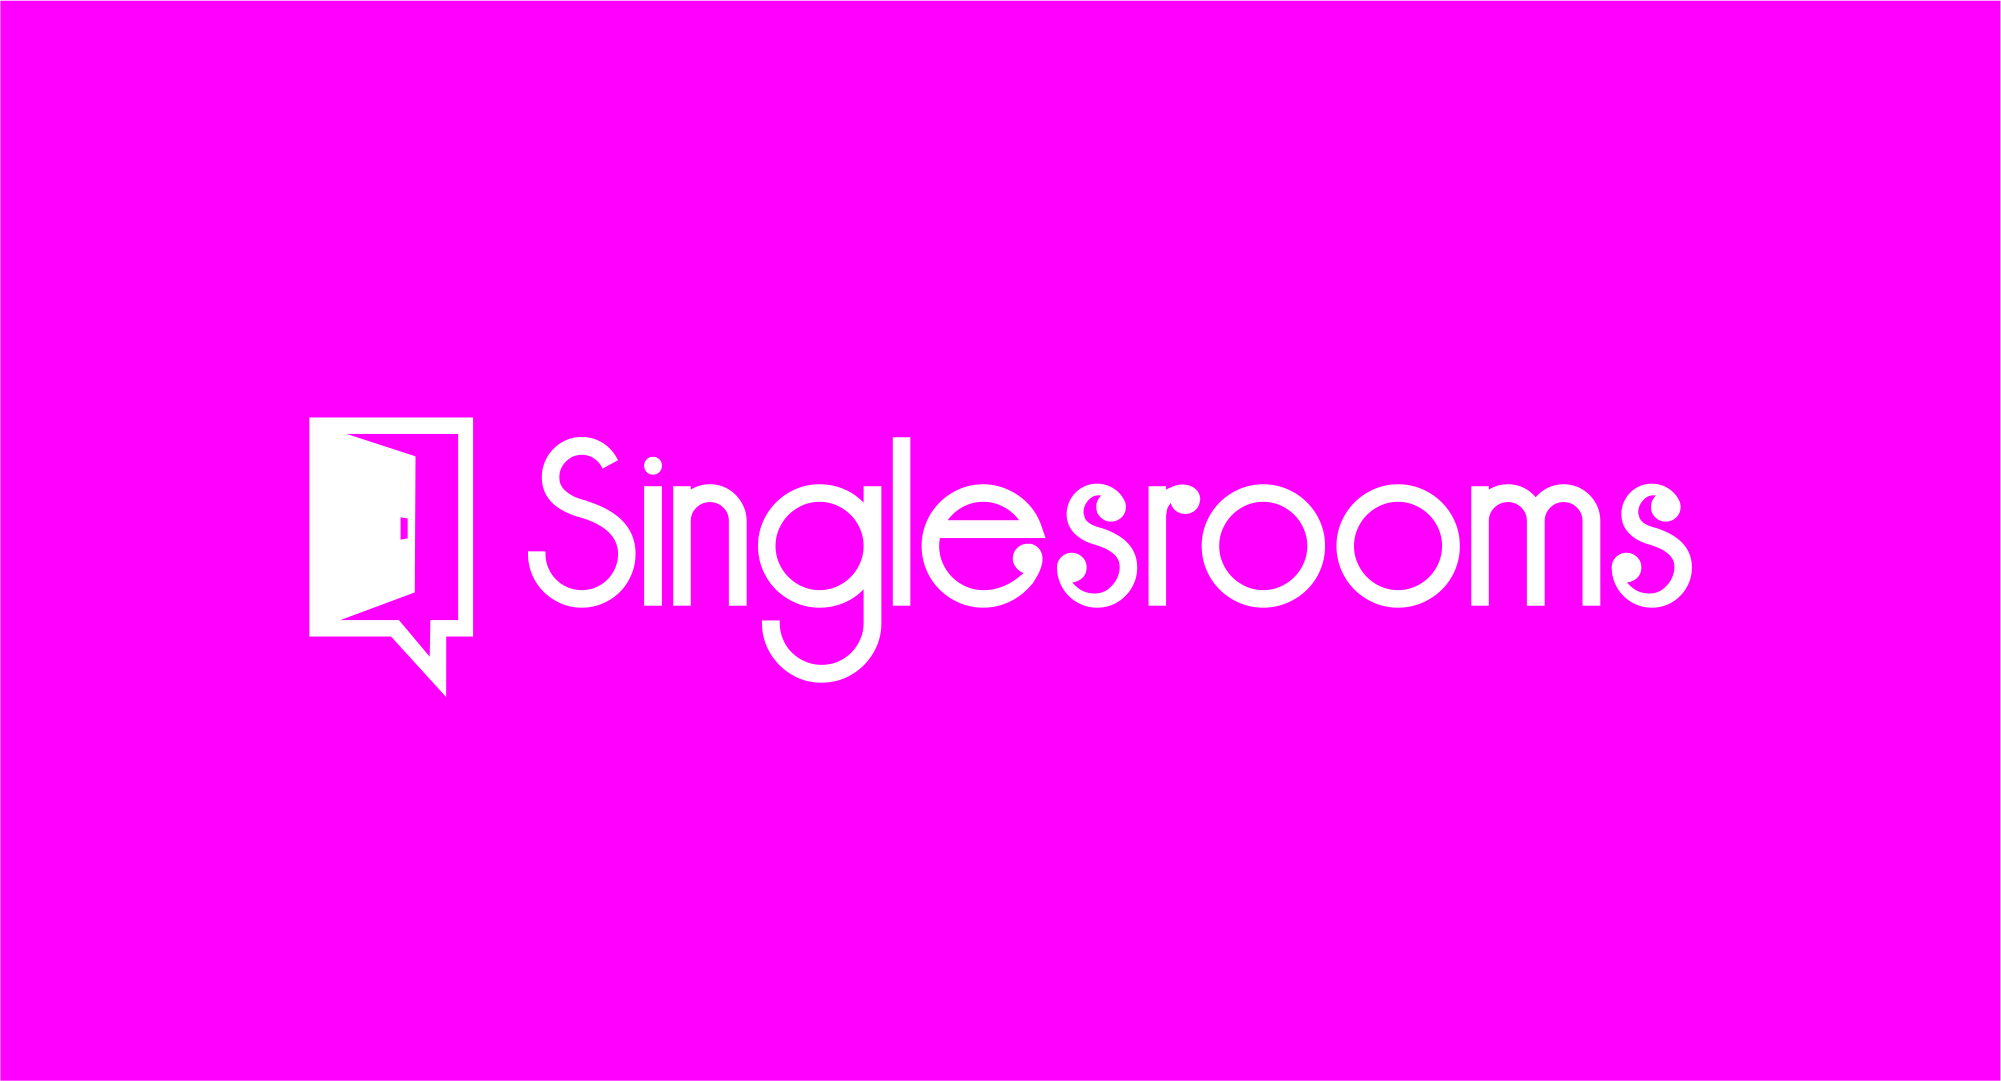 singlesrooms logo design